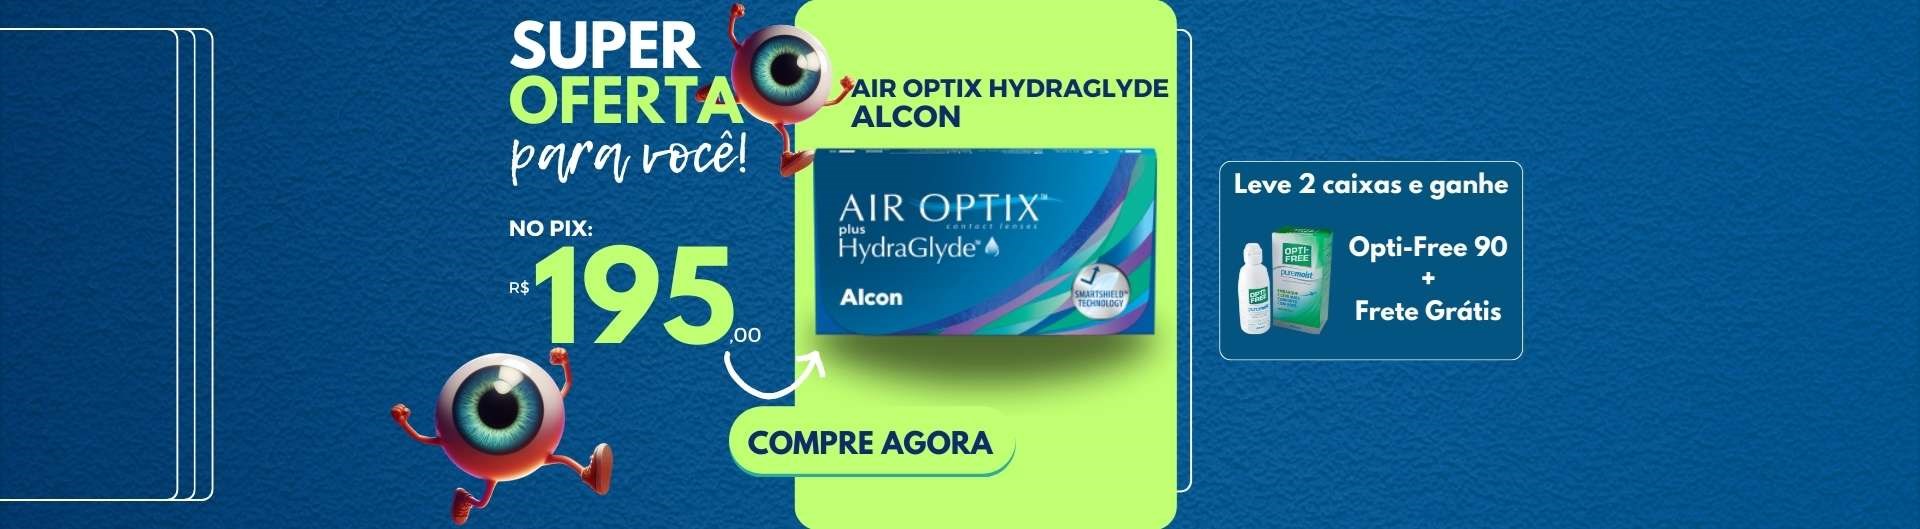 Lentes de Contato Air Optix Hydraglyde - Alcon